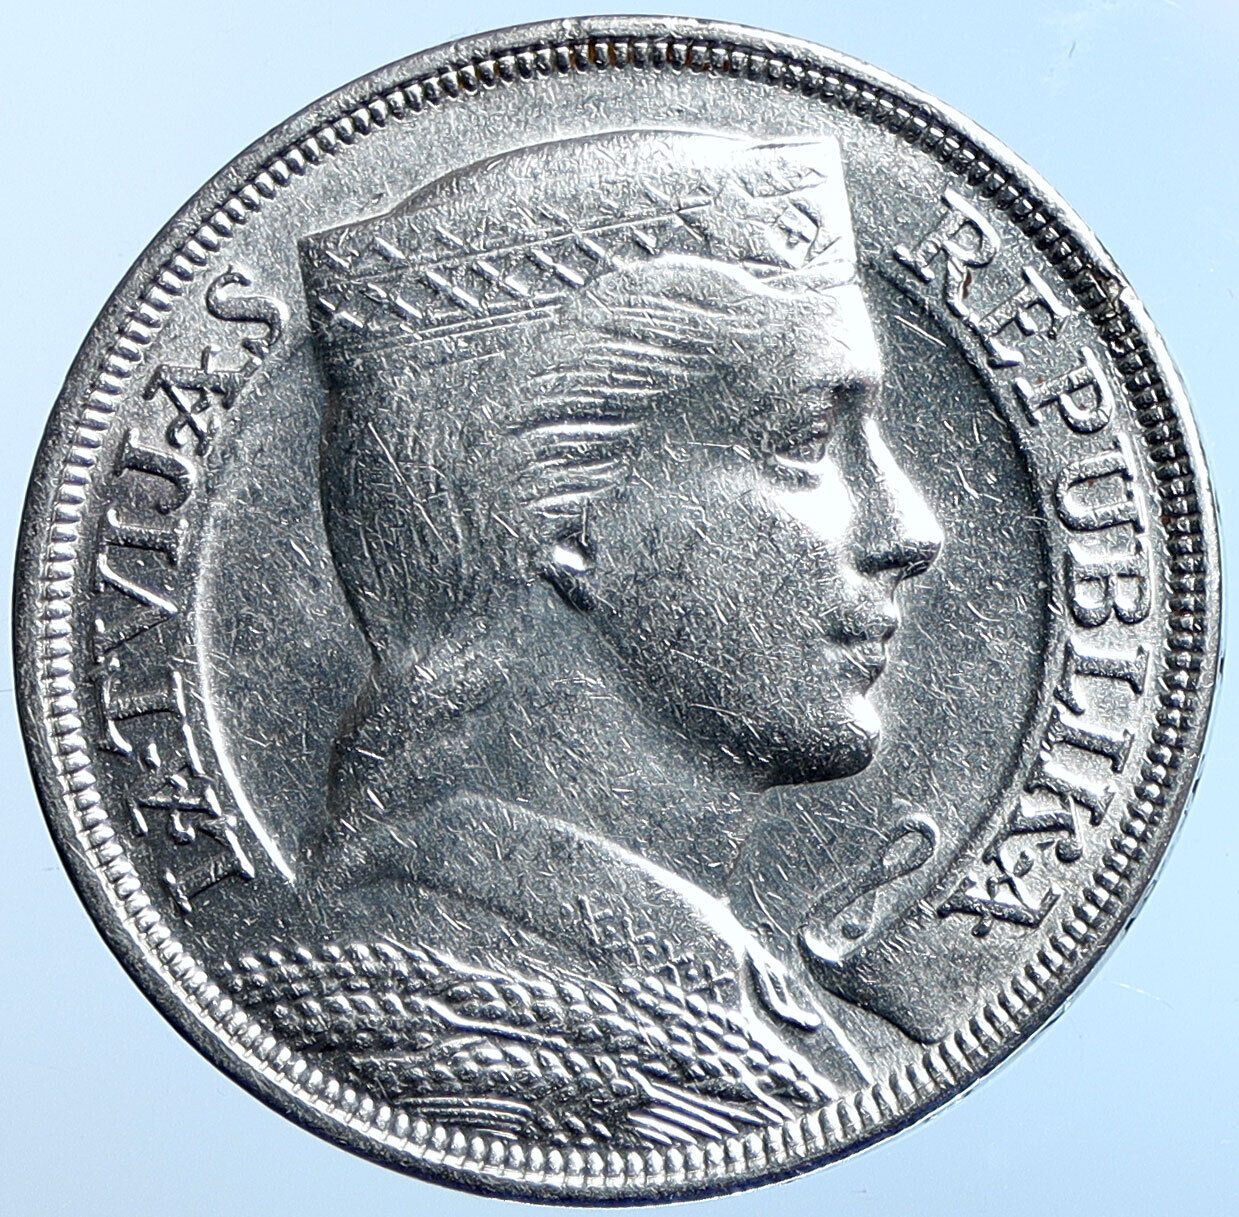 1931 LATVIA w Female Headwear 5 Lati LARGE Vintage Silver European Coin i114622